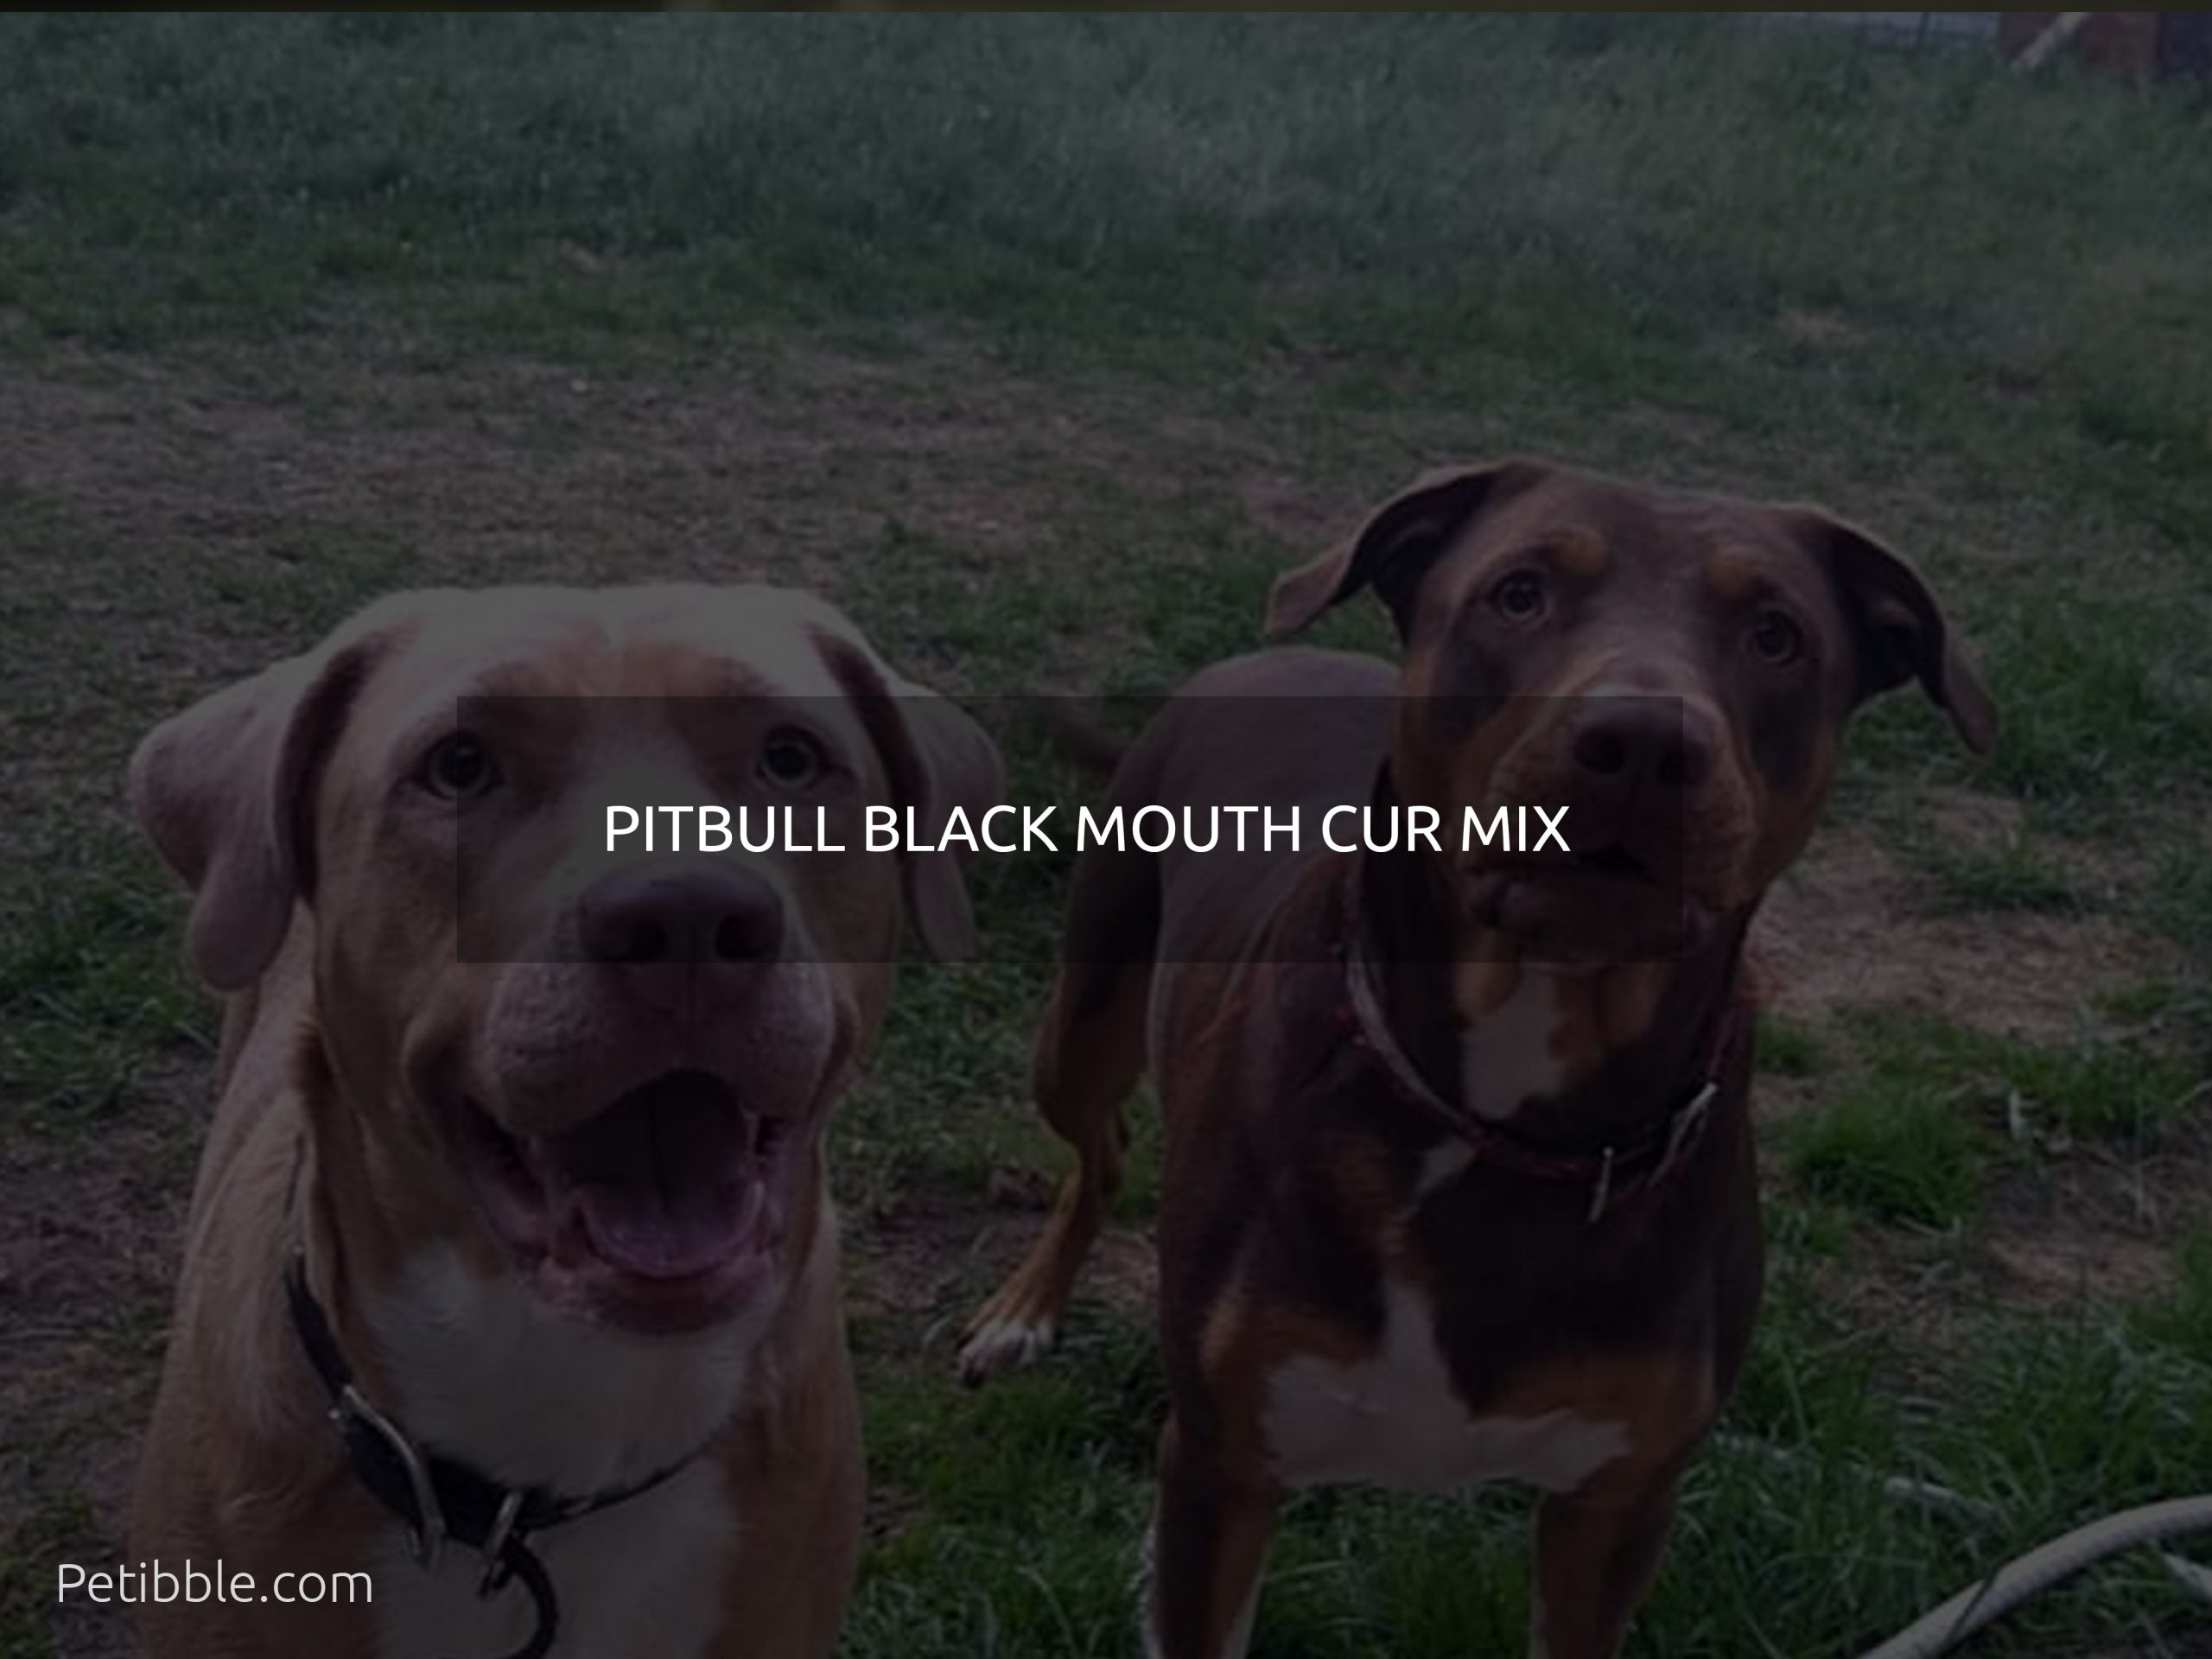 Pitbull black mouth cur mix